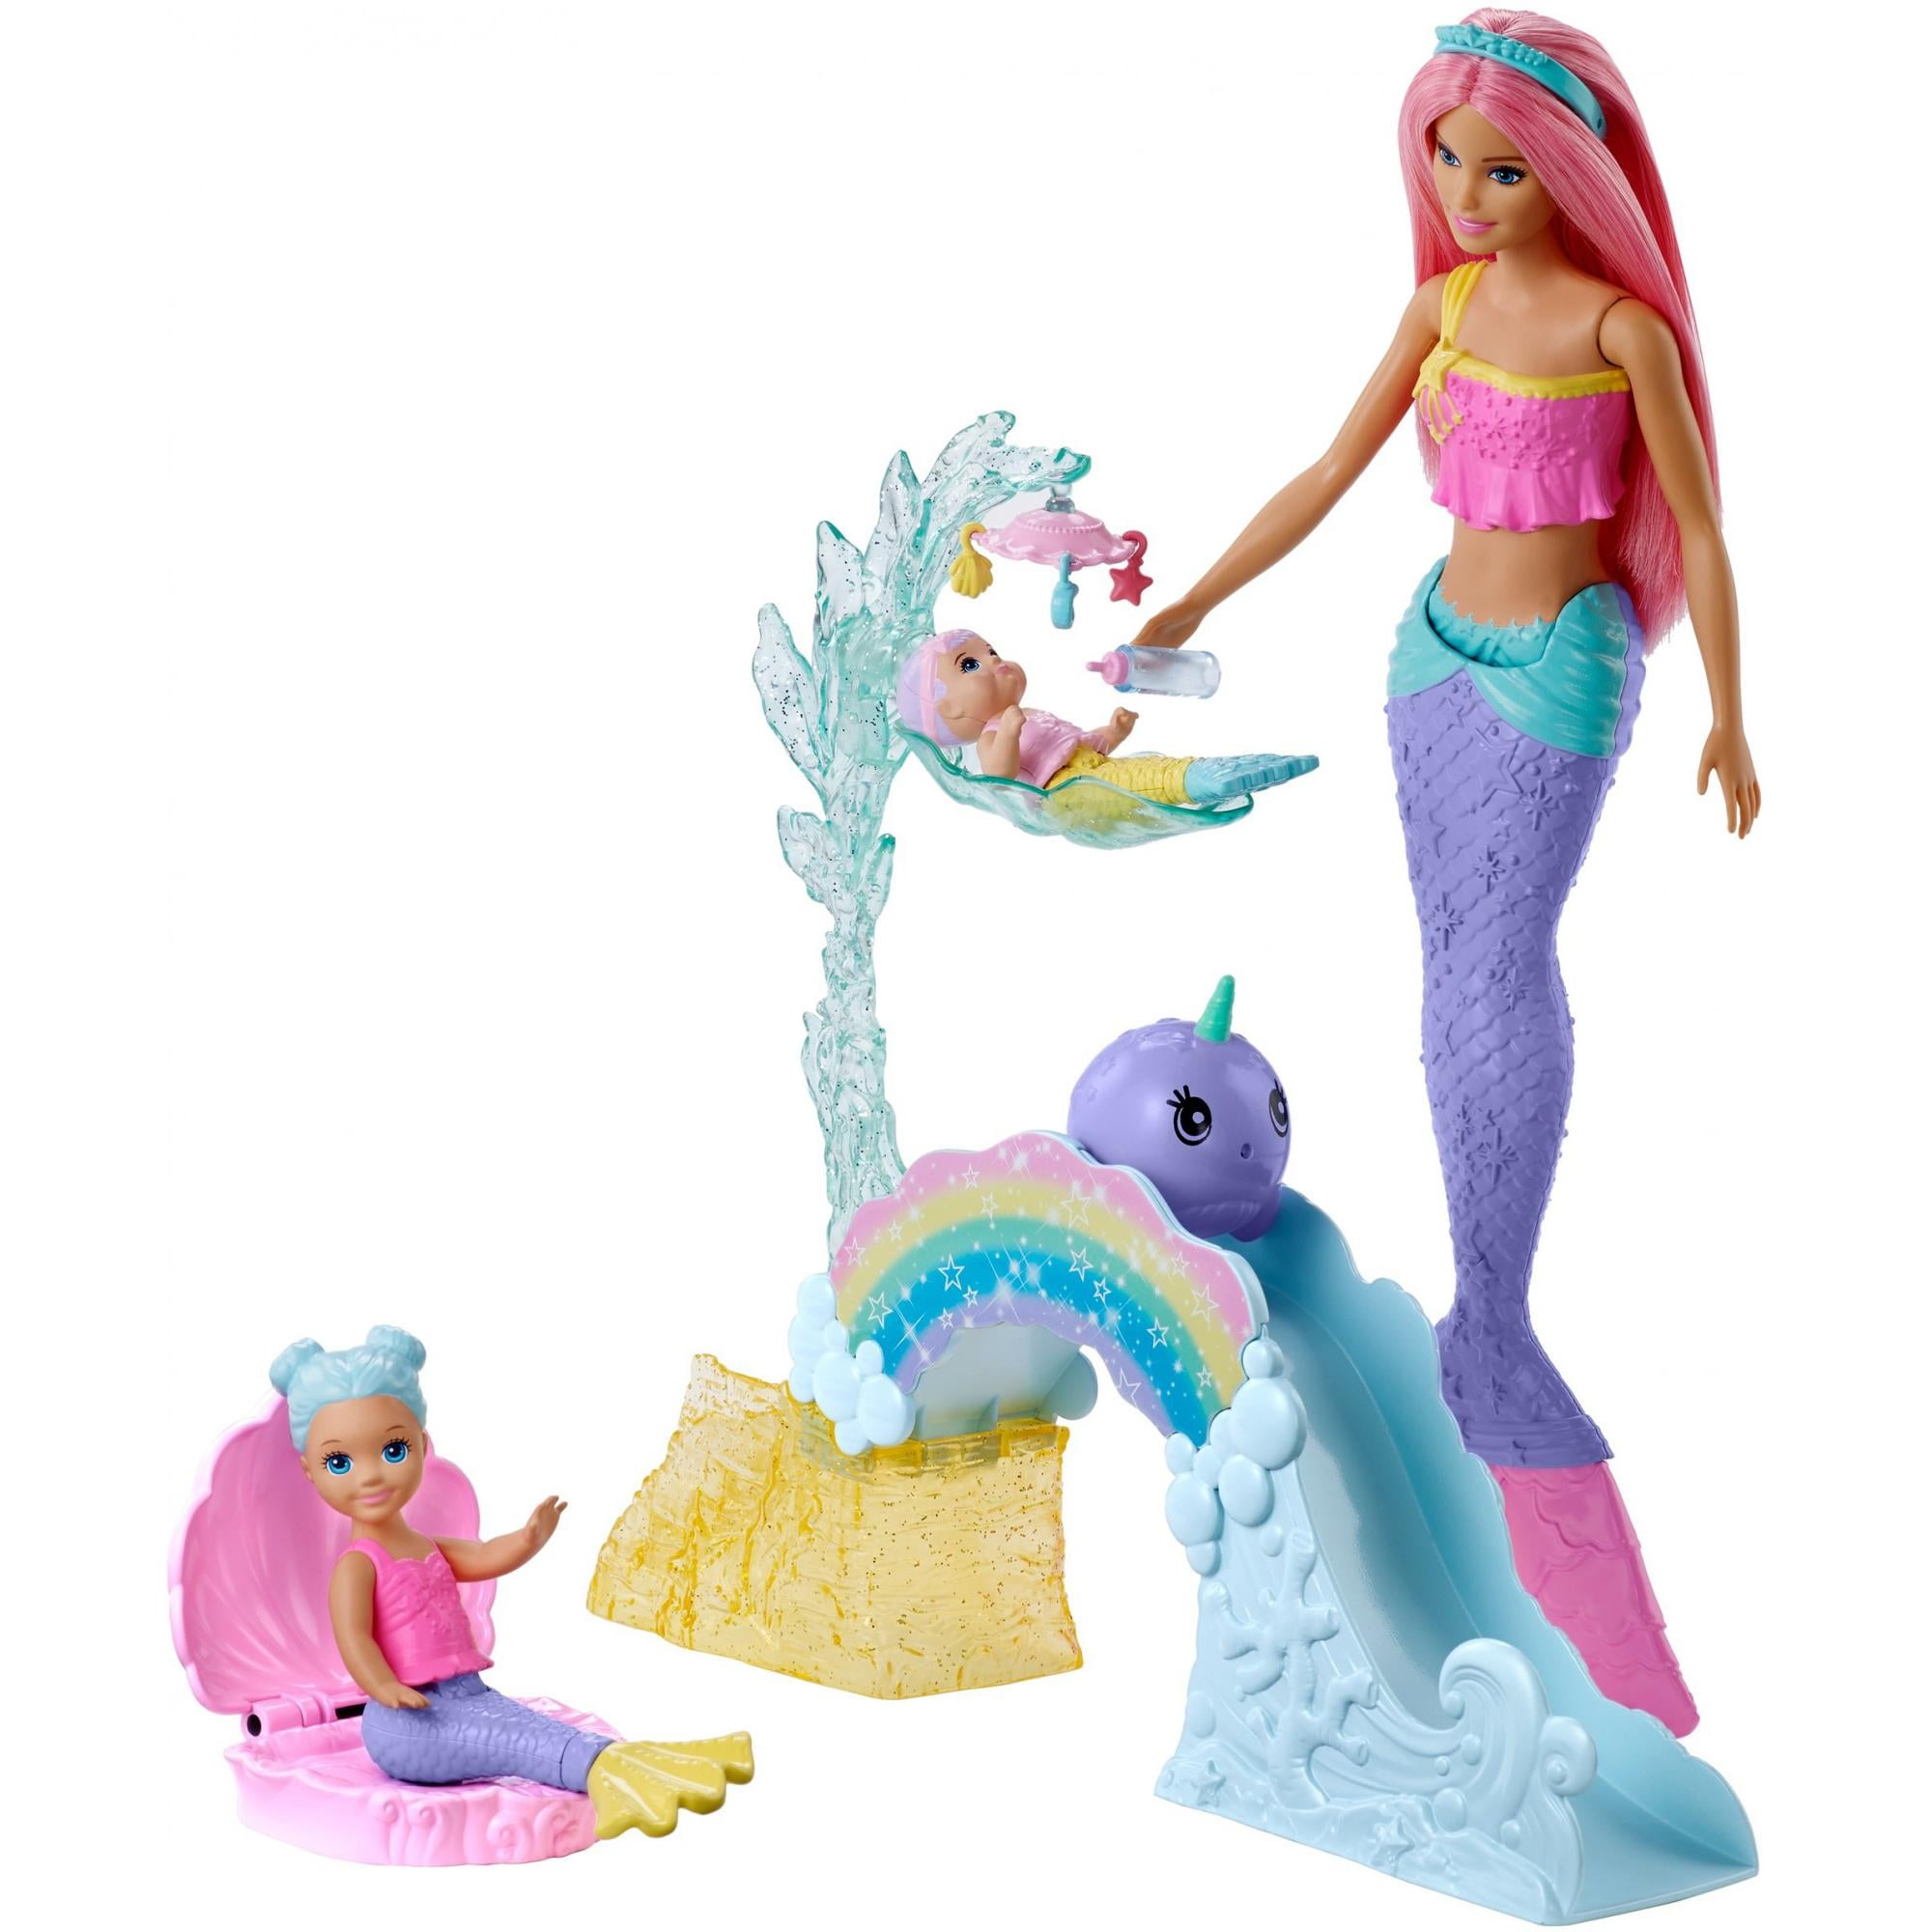 Lol Surprise Dolls Happy Birthday Card Cake Topper picks Mermaid Merbaby Rainbow 